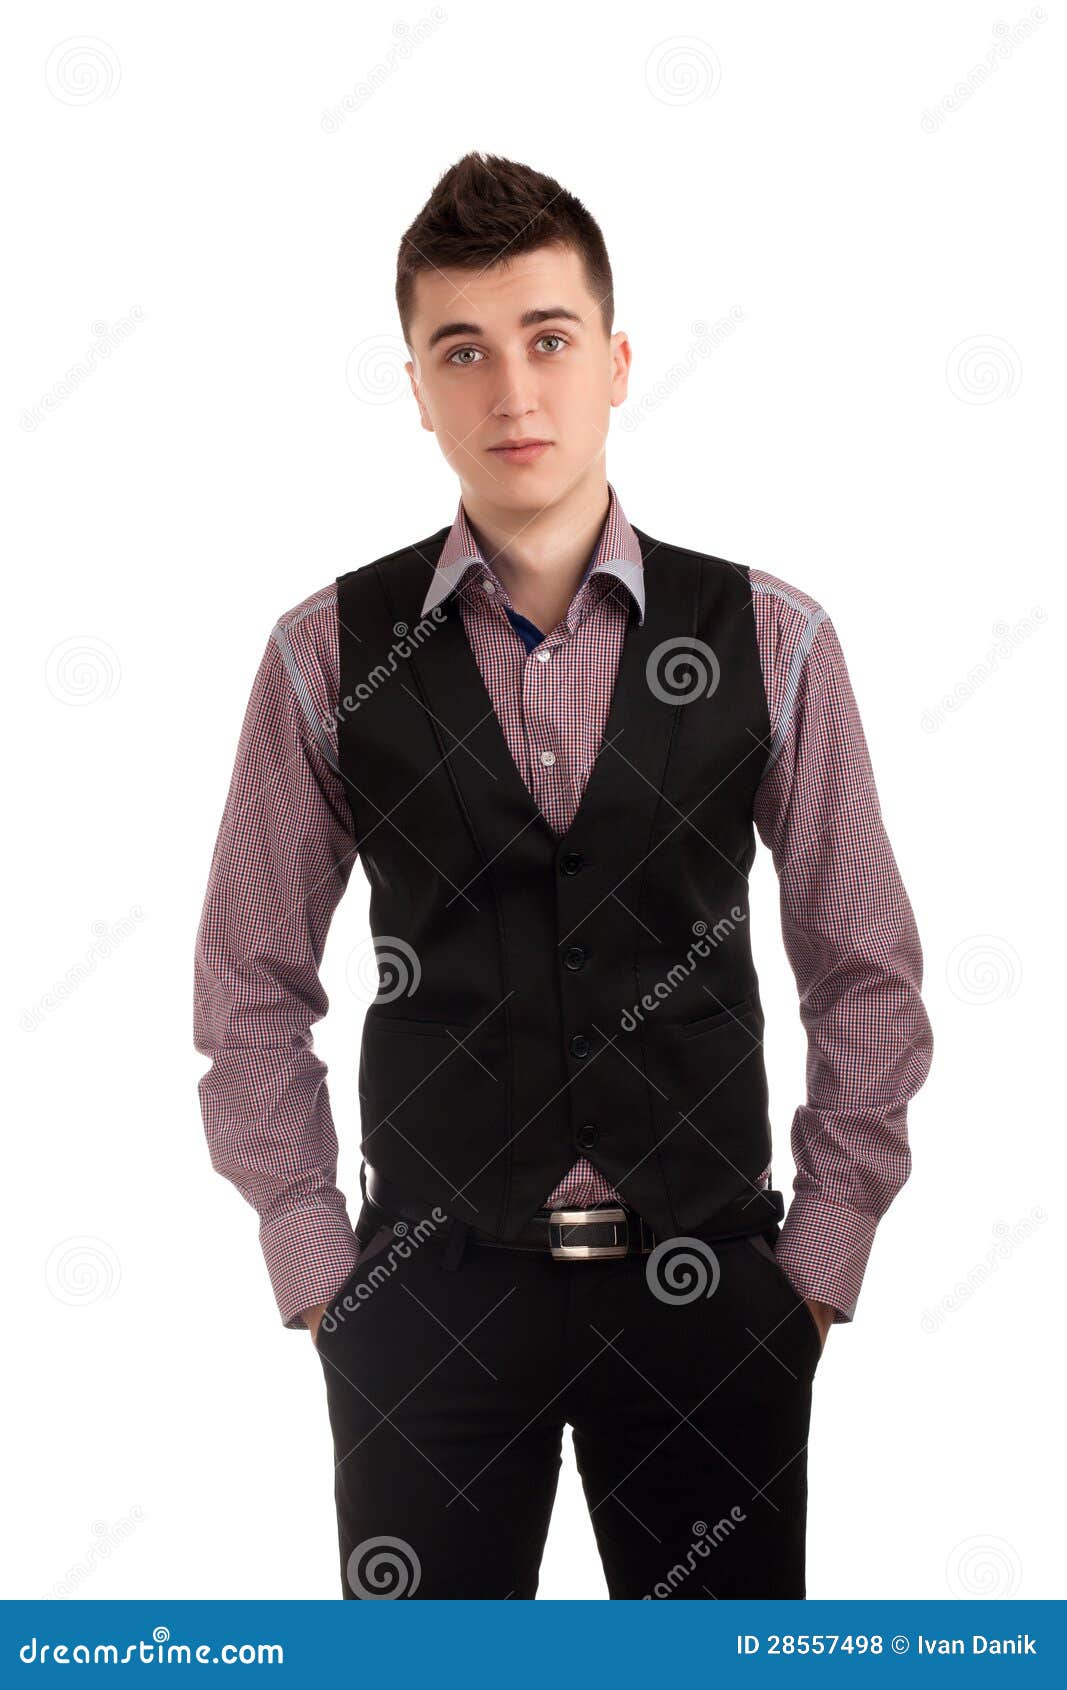 Sway skak petroleum Young man in a vest stock photo. Image of caucasian, studio - 28557498